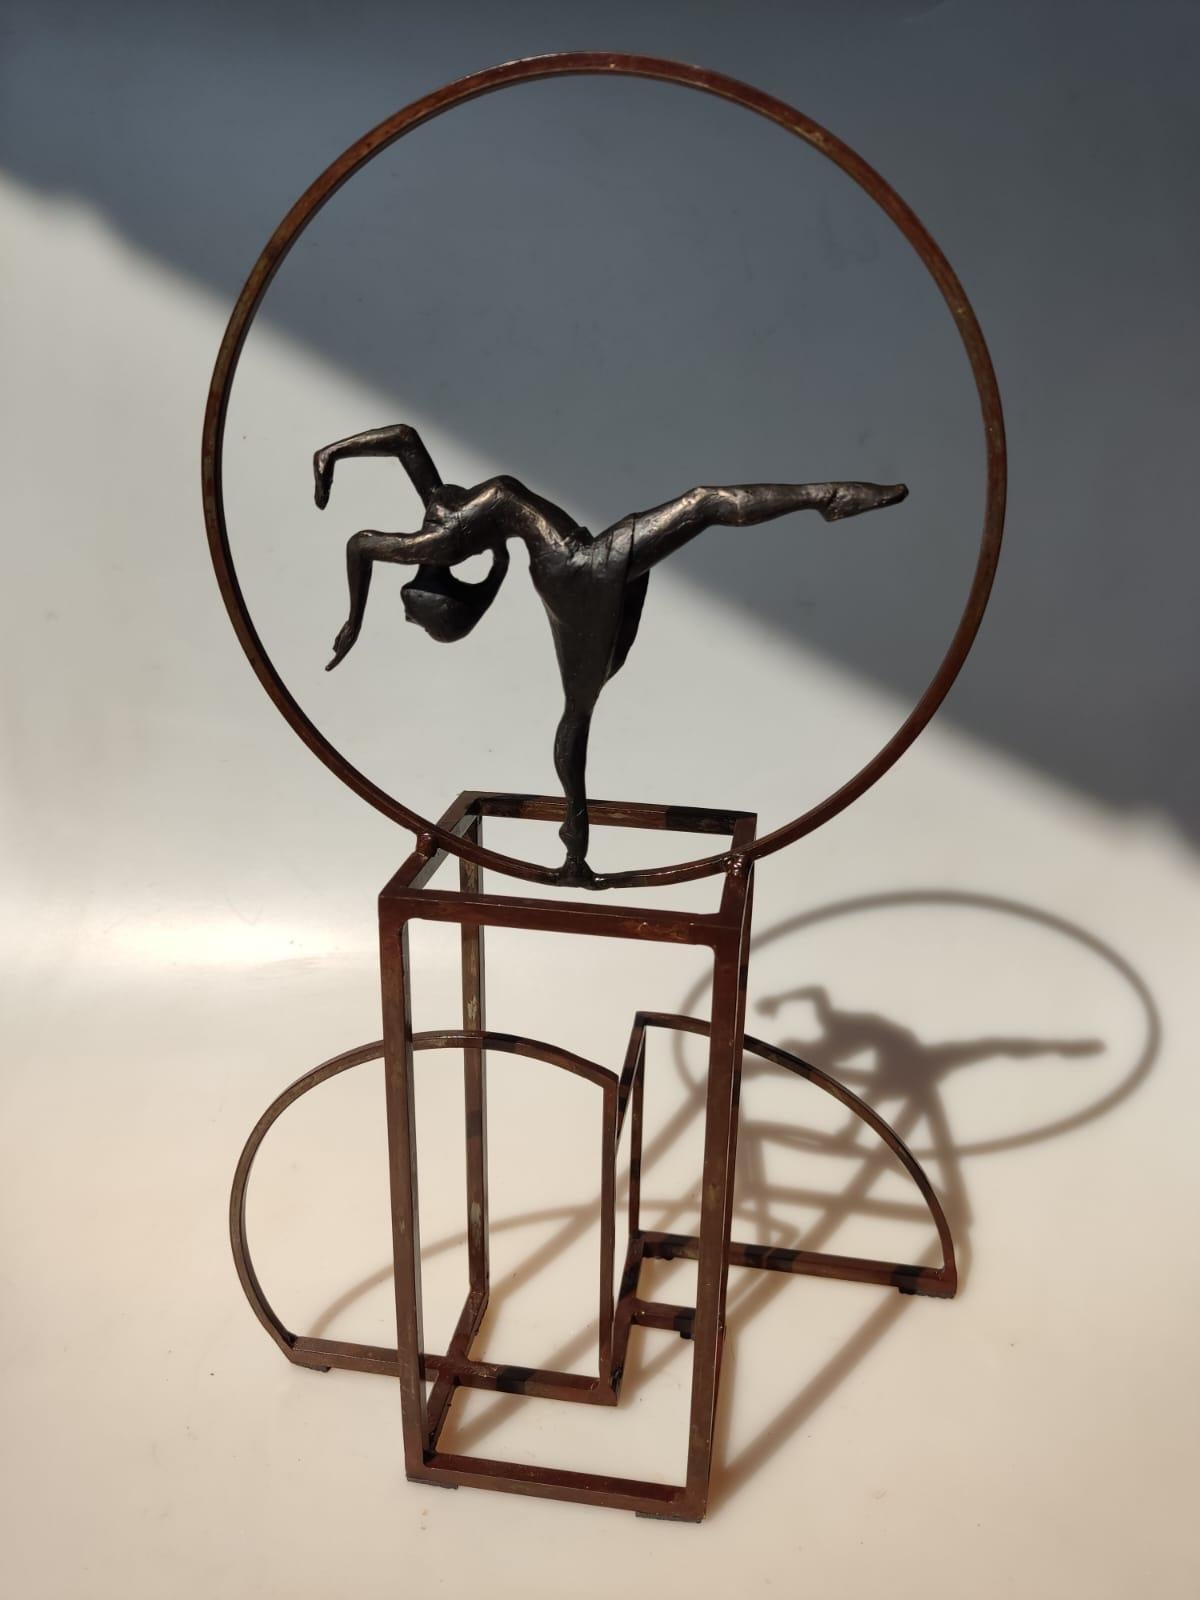 Joan Artigas Planas Figurative Sculpture - "Isadora II" contemporary bronze table, mural sculpture figurative ballet dance